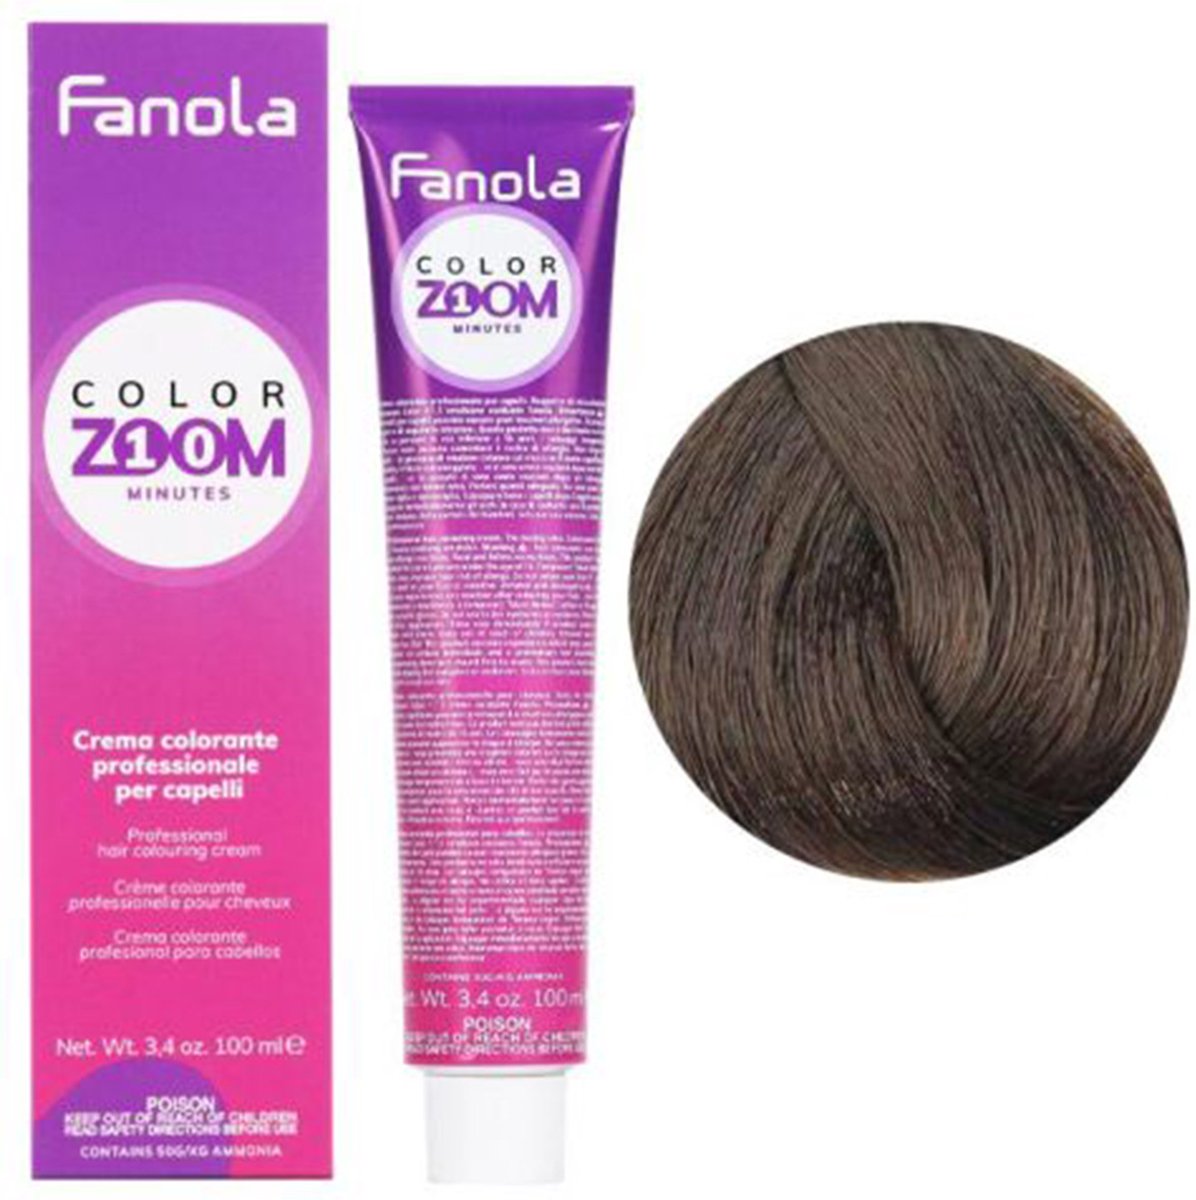 Fanola - Color Zoom - 100 ml - 4.0